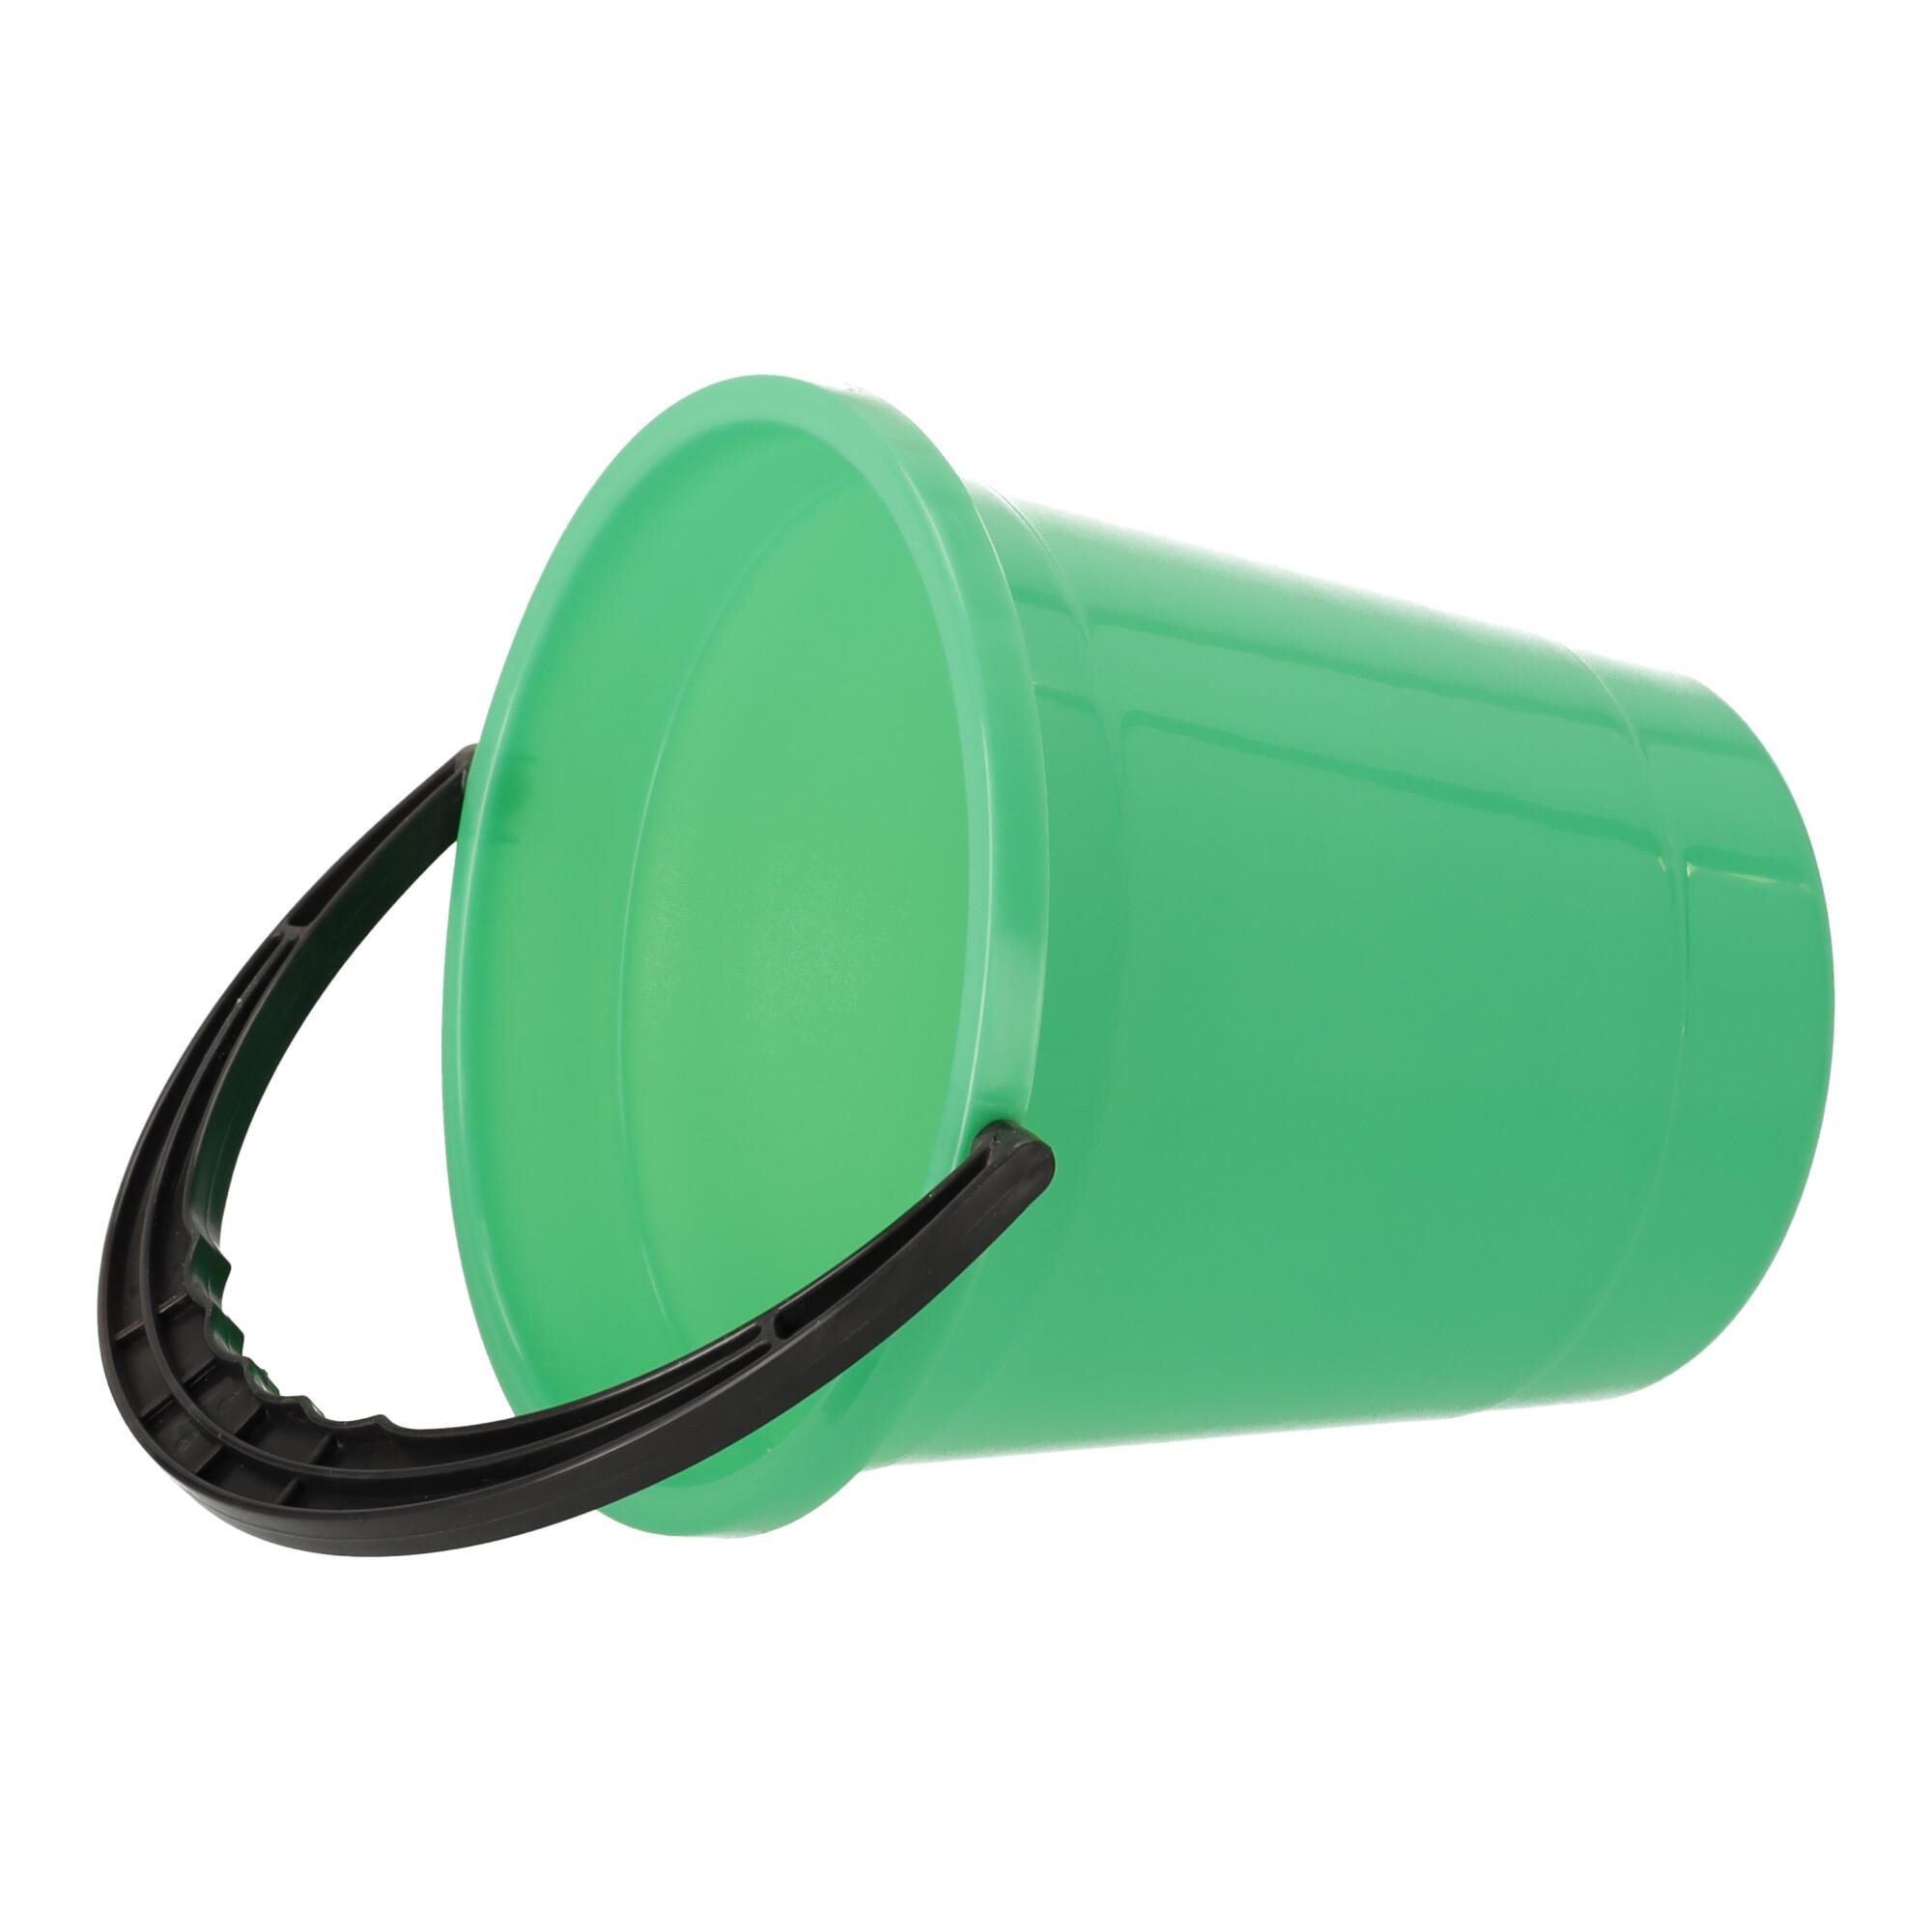 Bucket 5L, POLISH PRODUCT - green